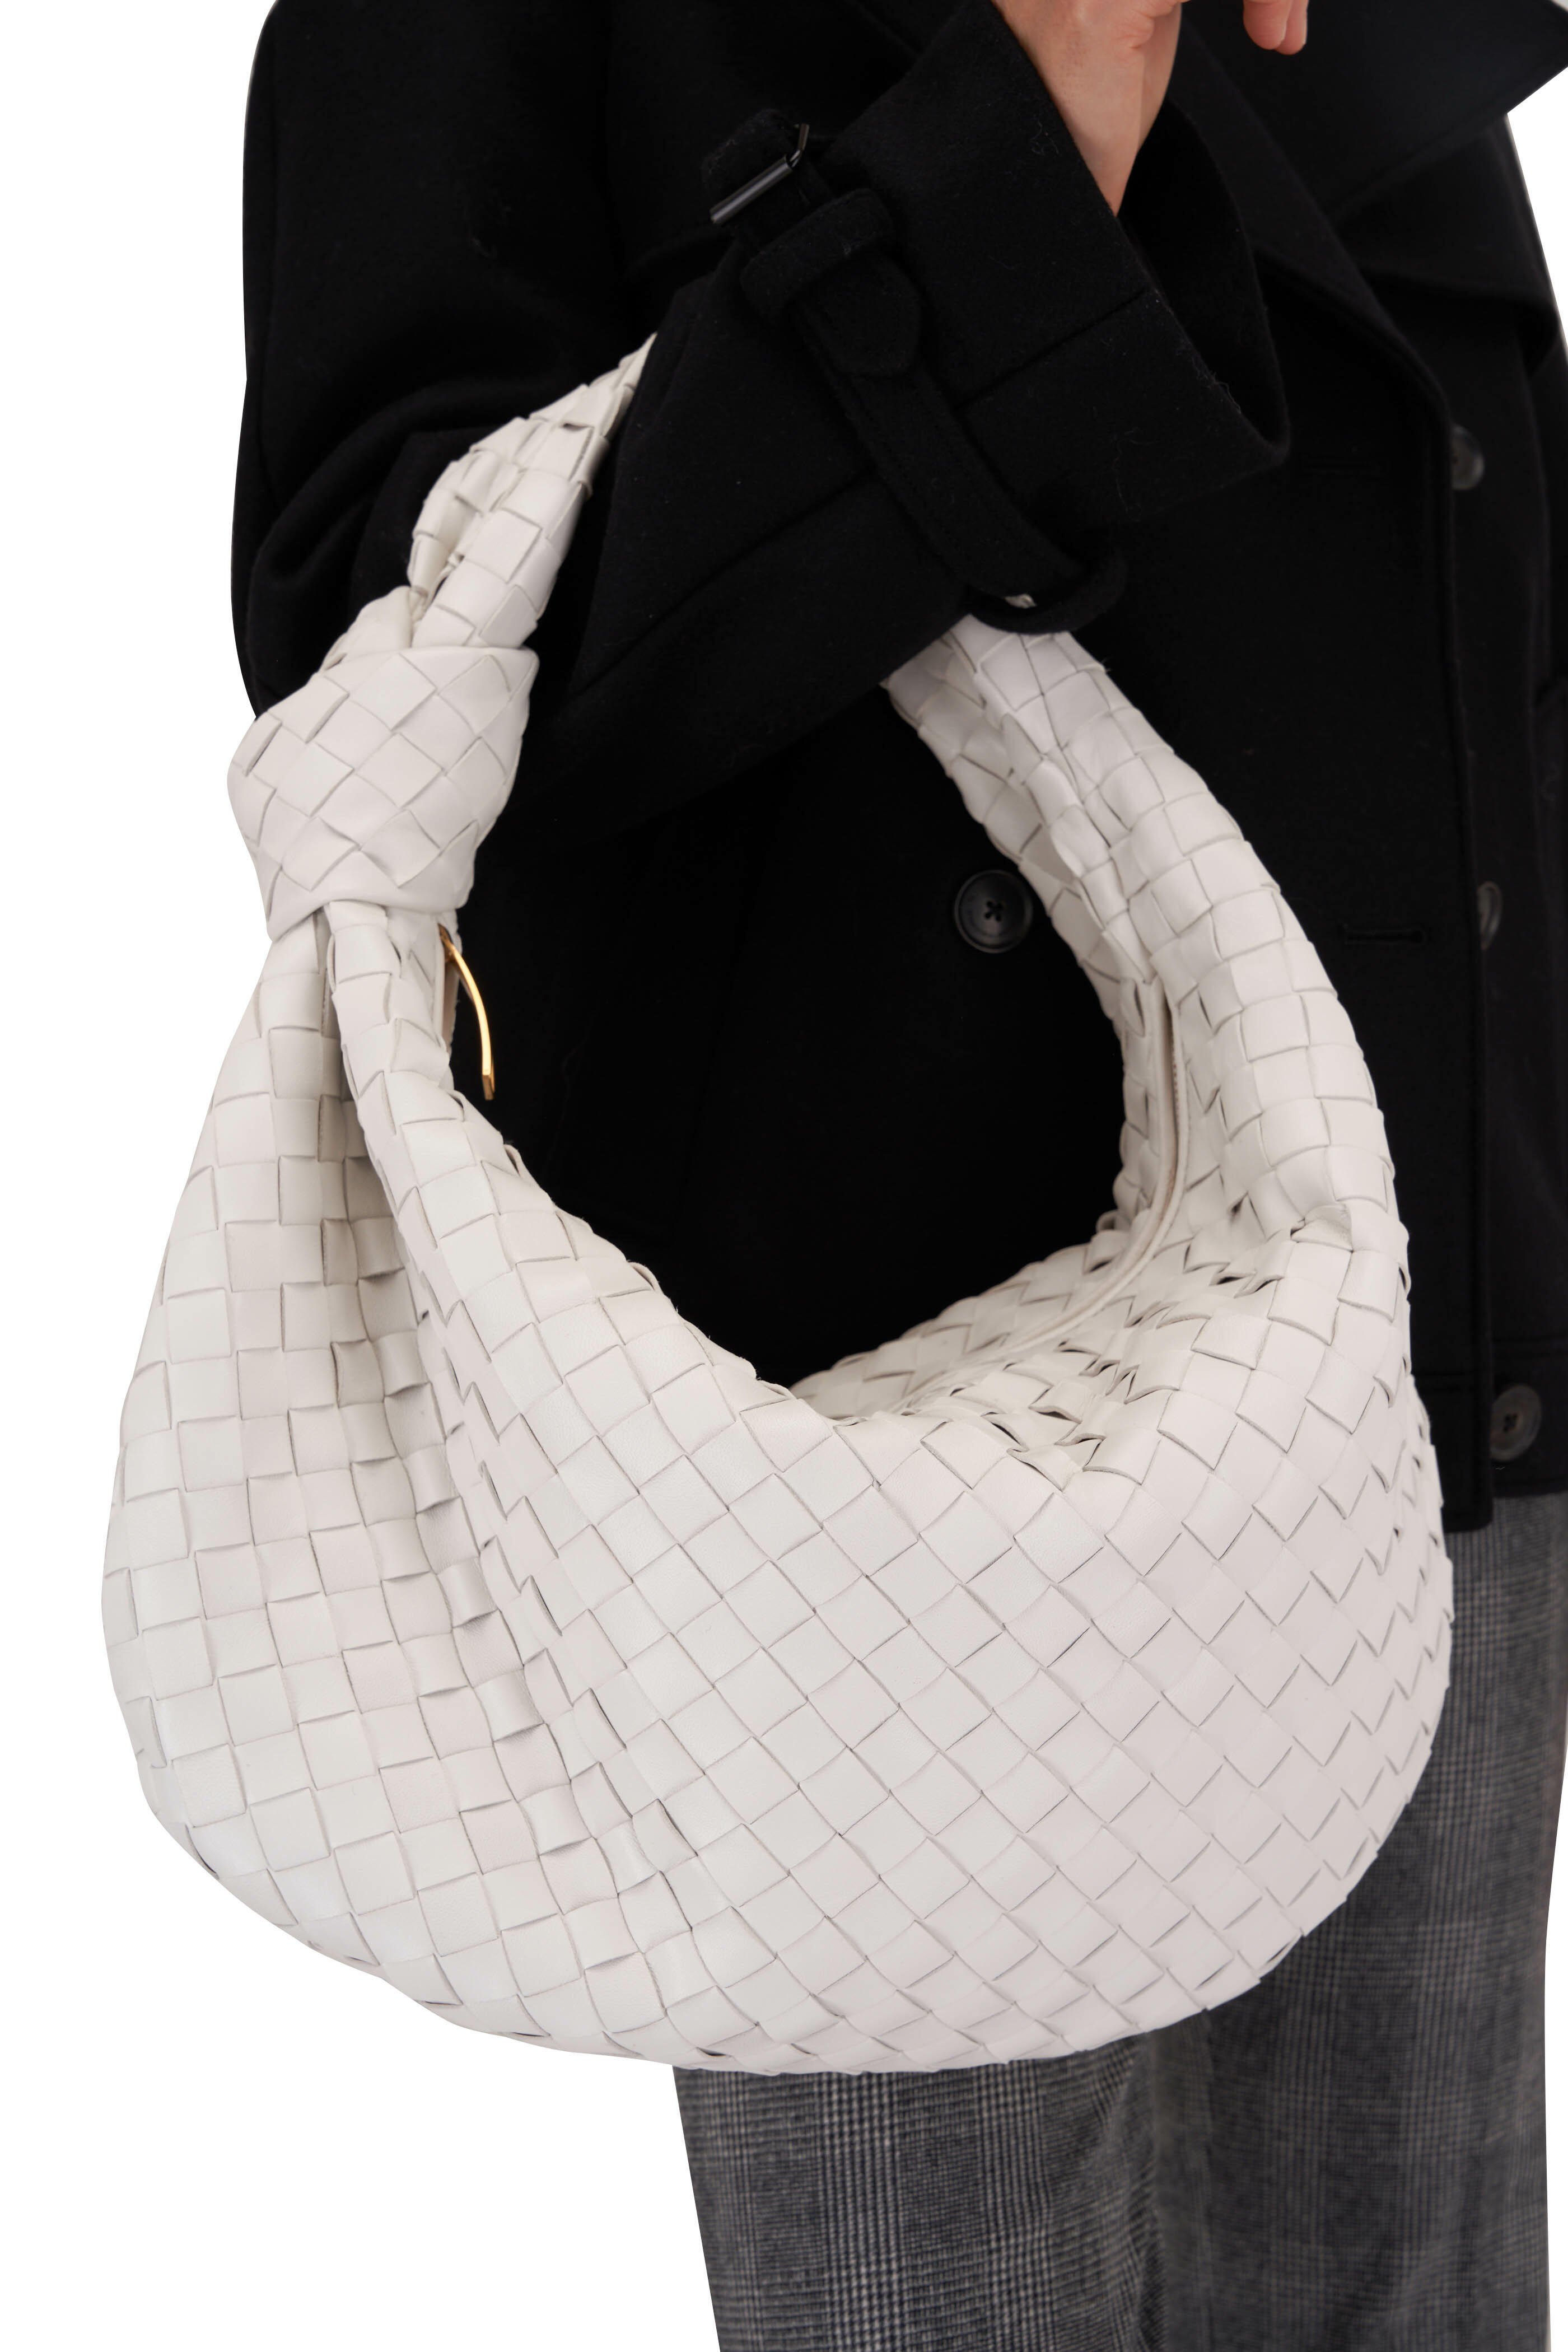 Bottega Veneta Women's Small Jodie Leather Hobo Bag - White